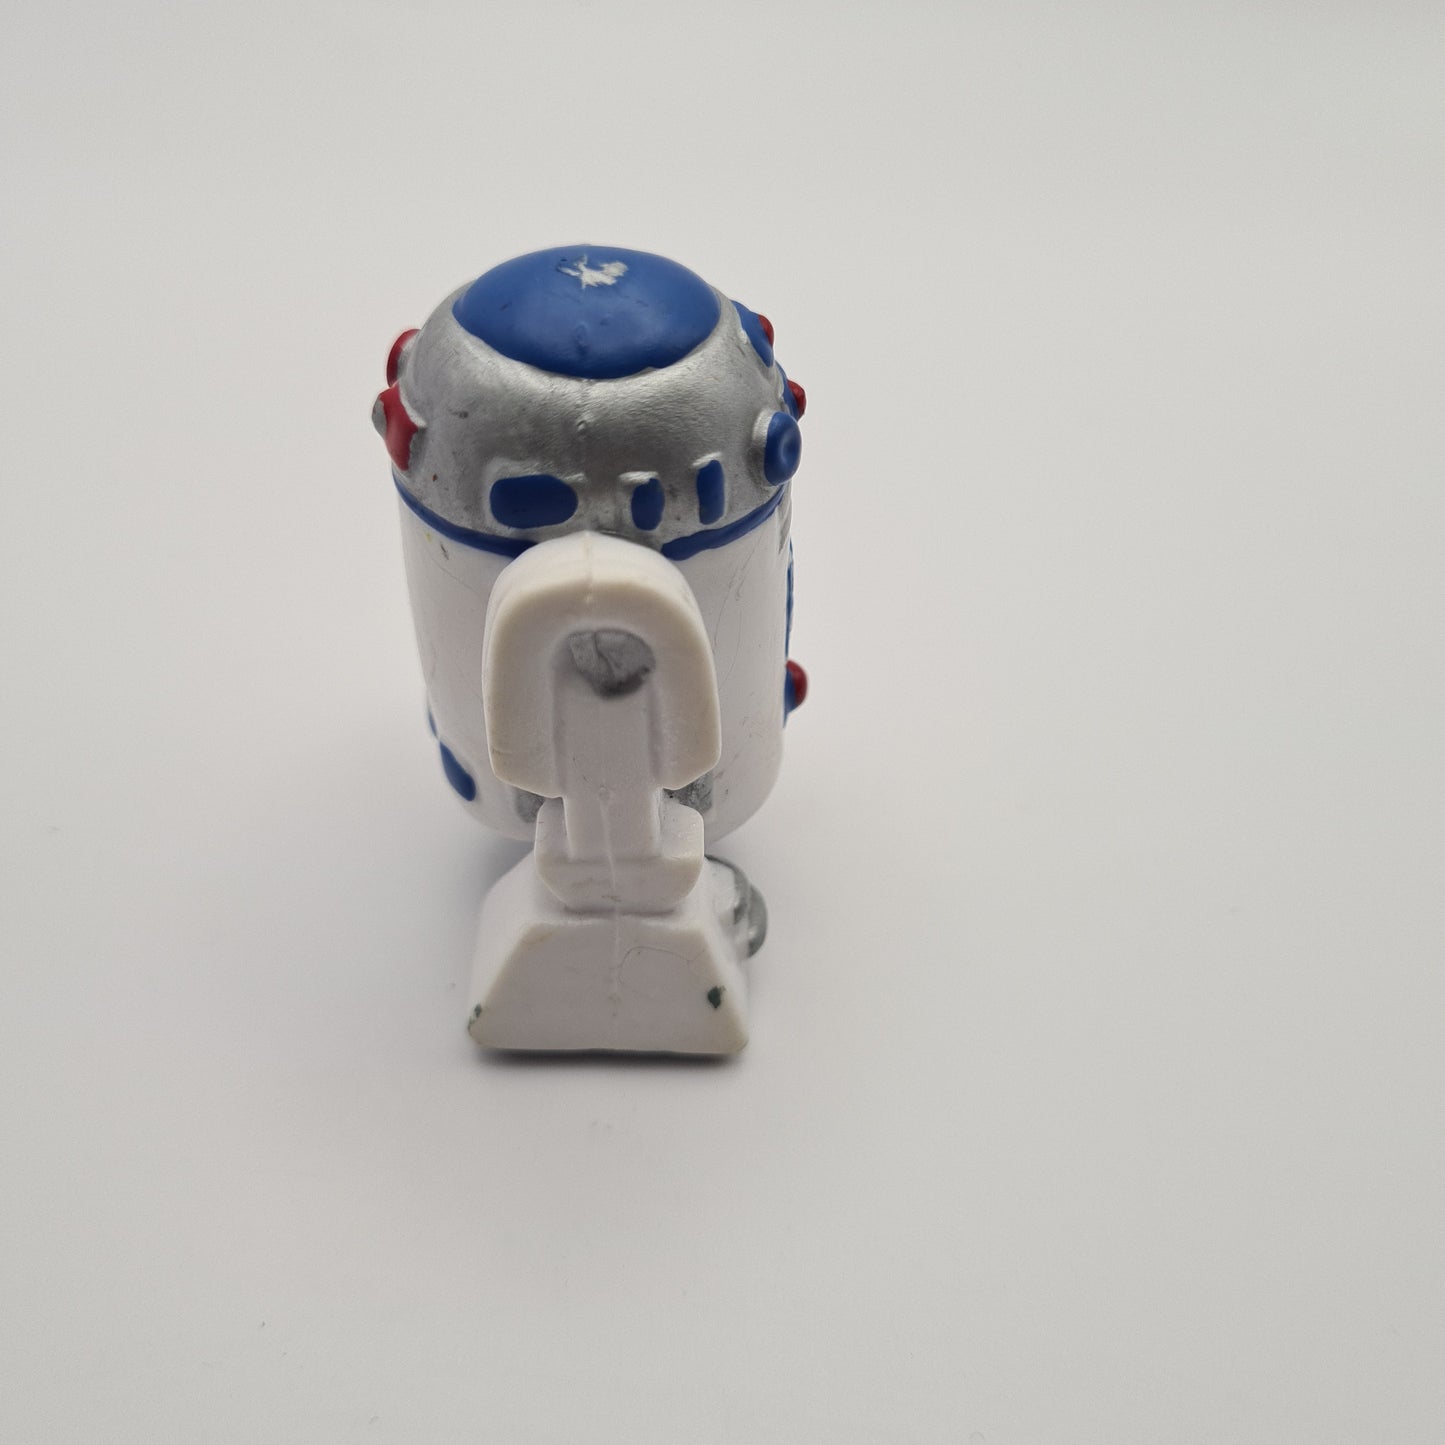 R2-D2 Star Tours Star Wars PVC Figure